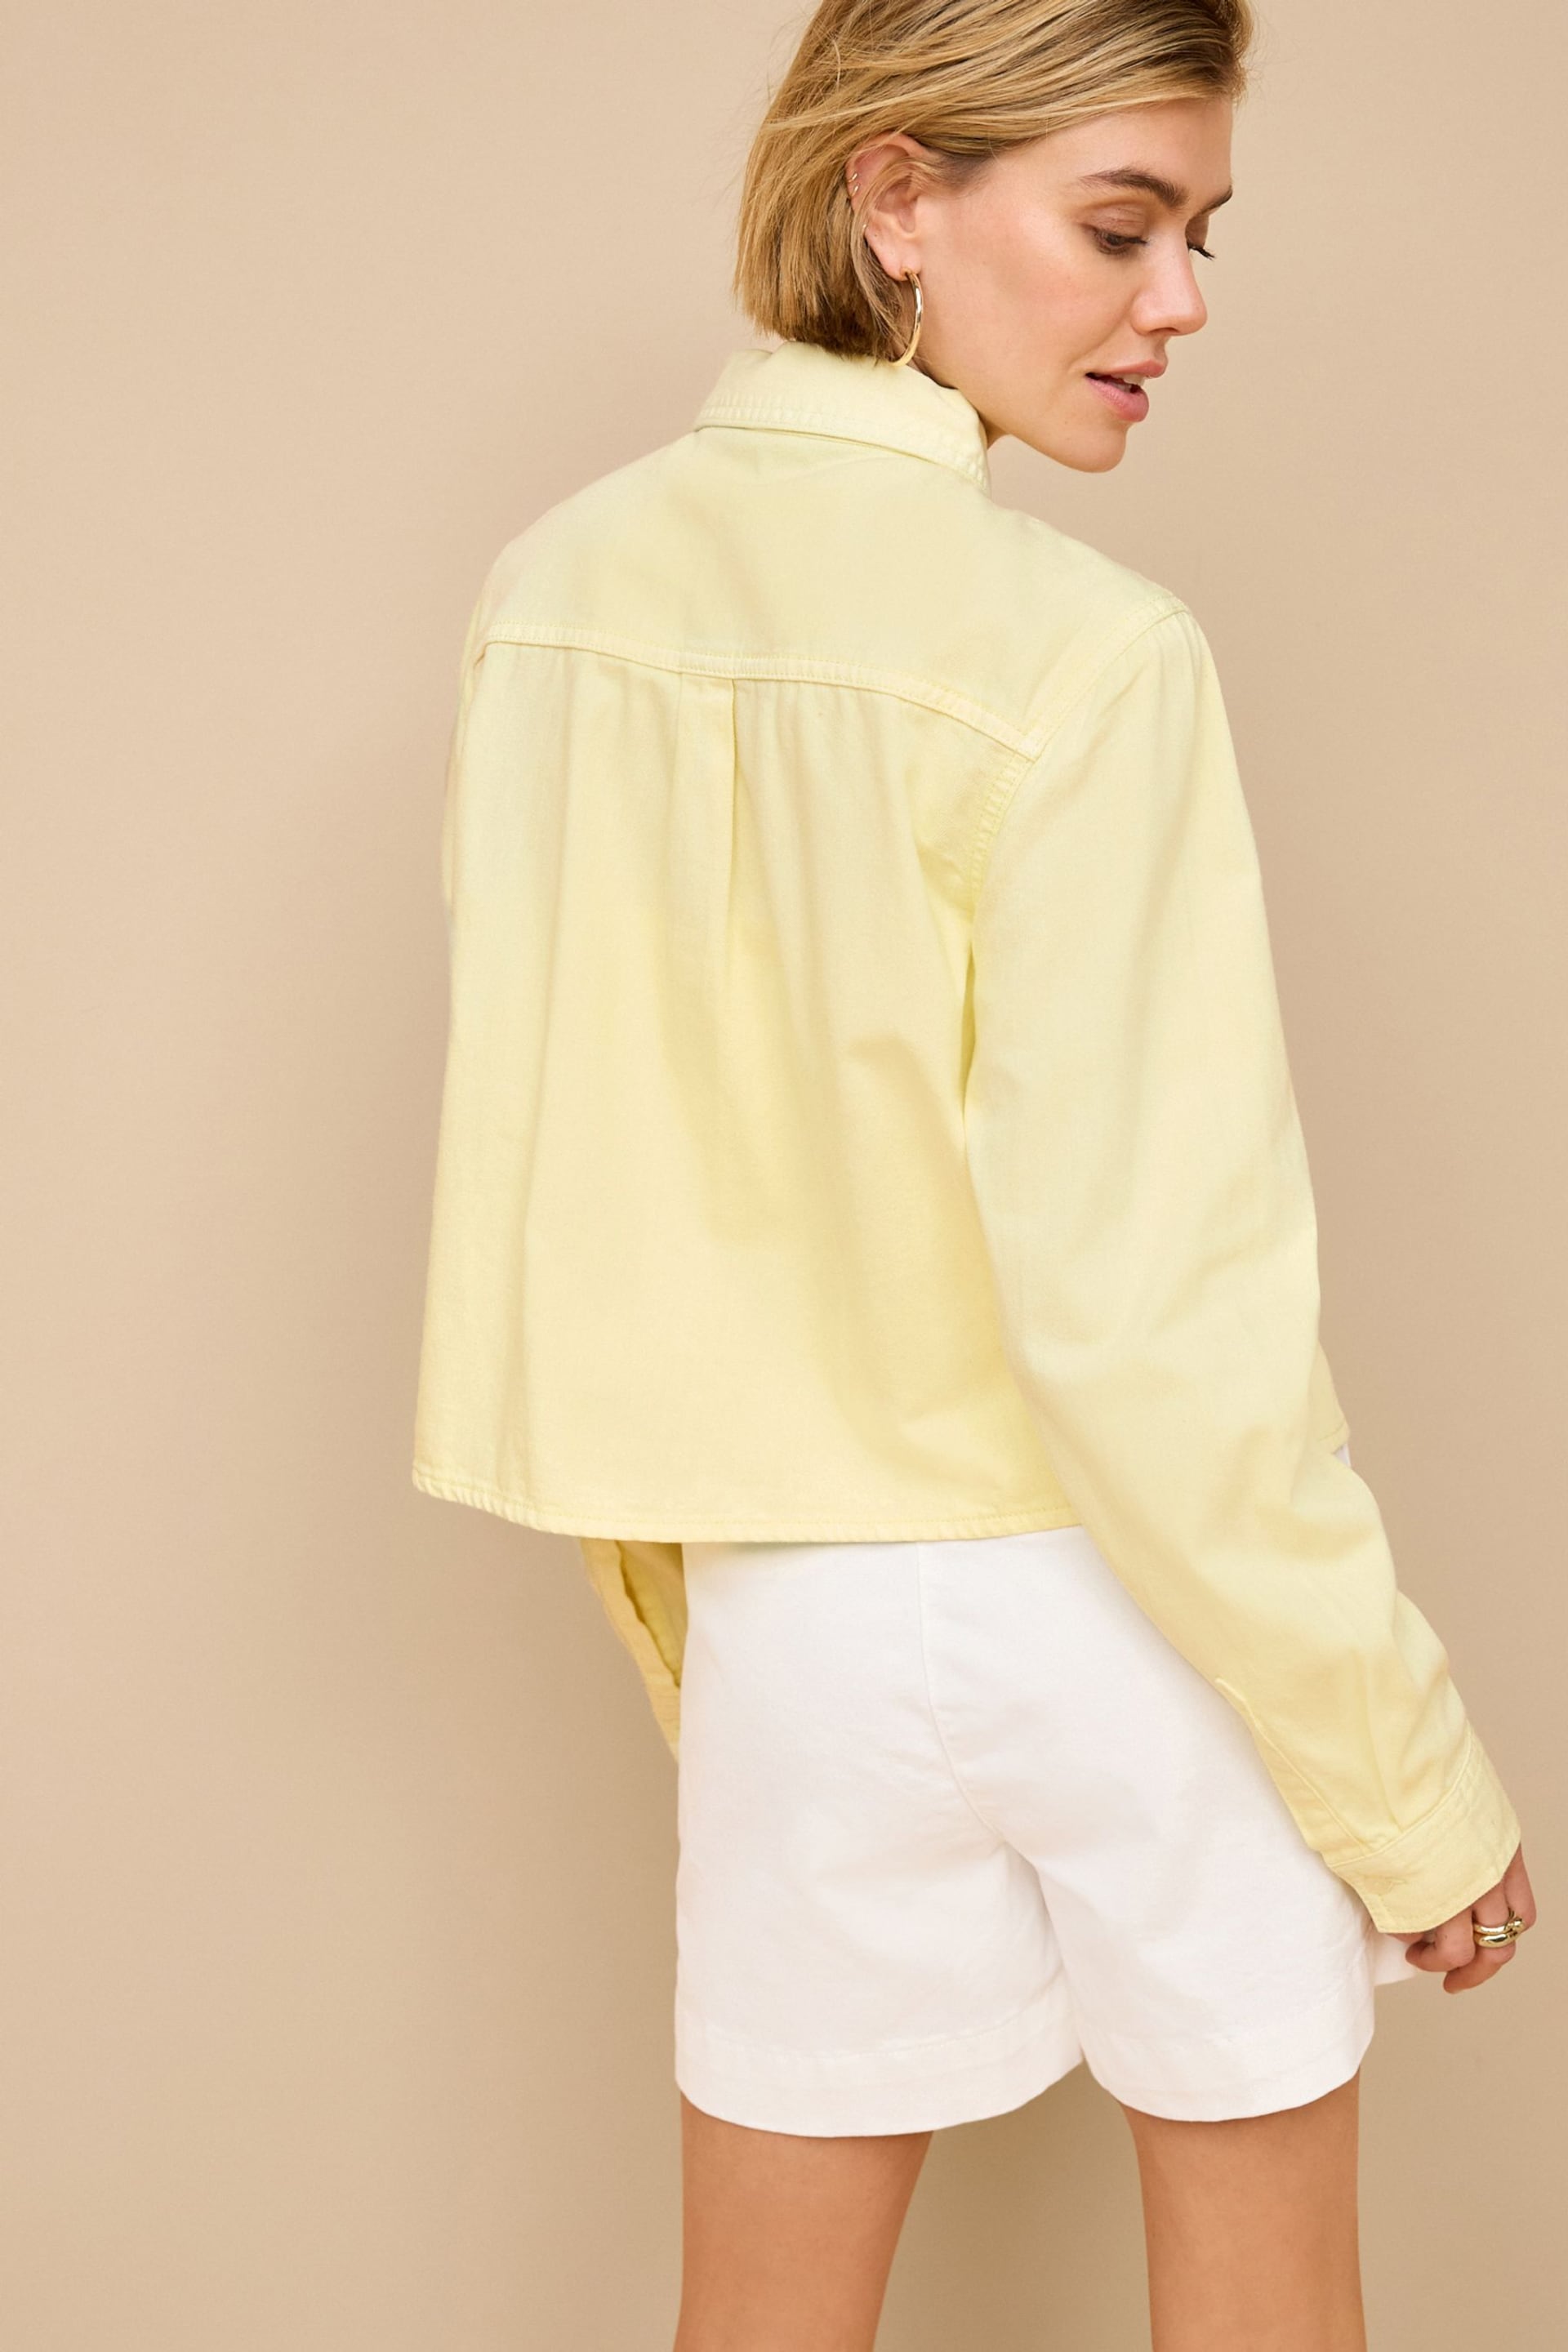 Lemon Yellow Cropped Denim Shirt - Image 3 of 6